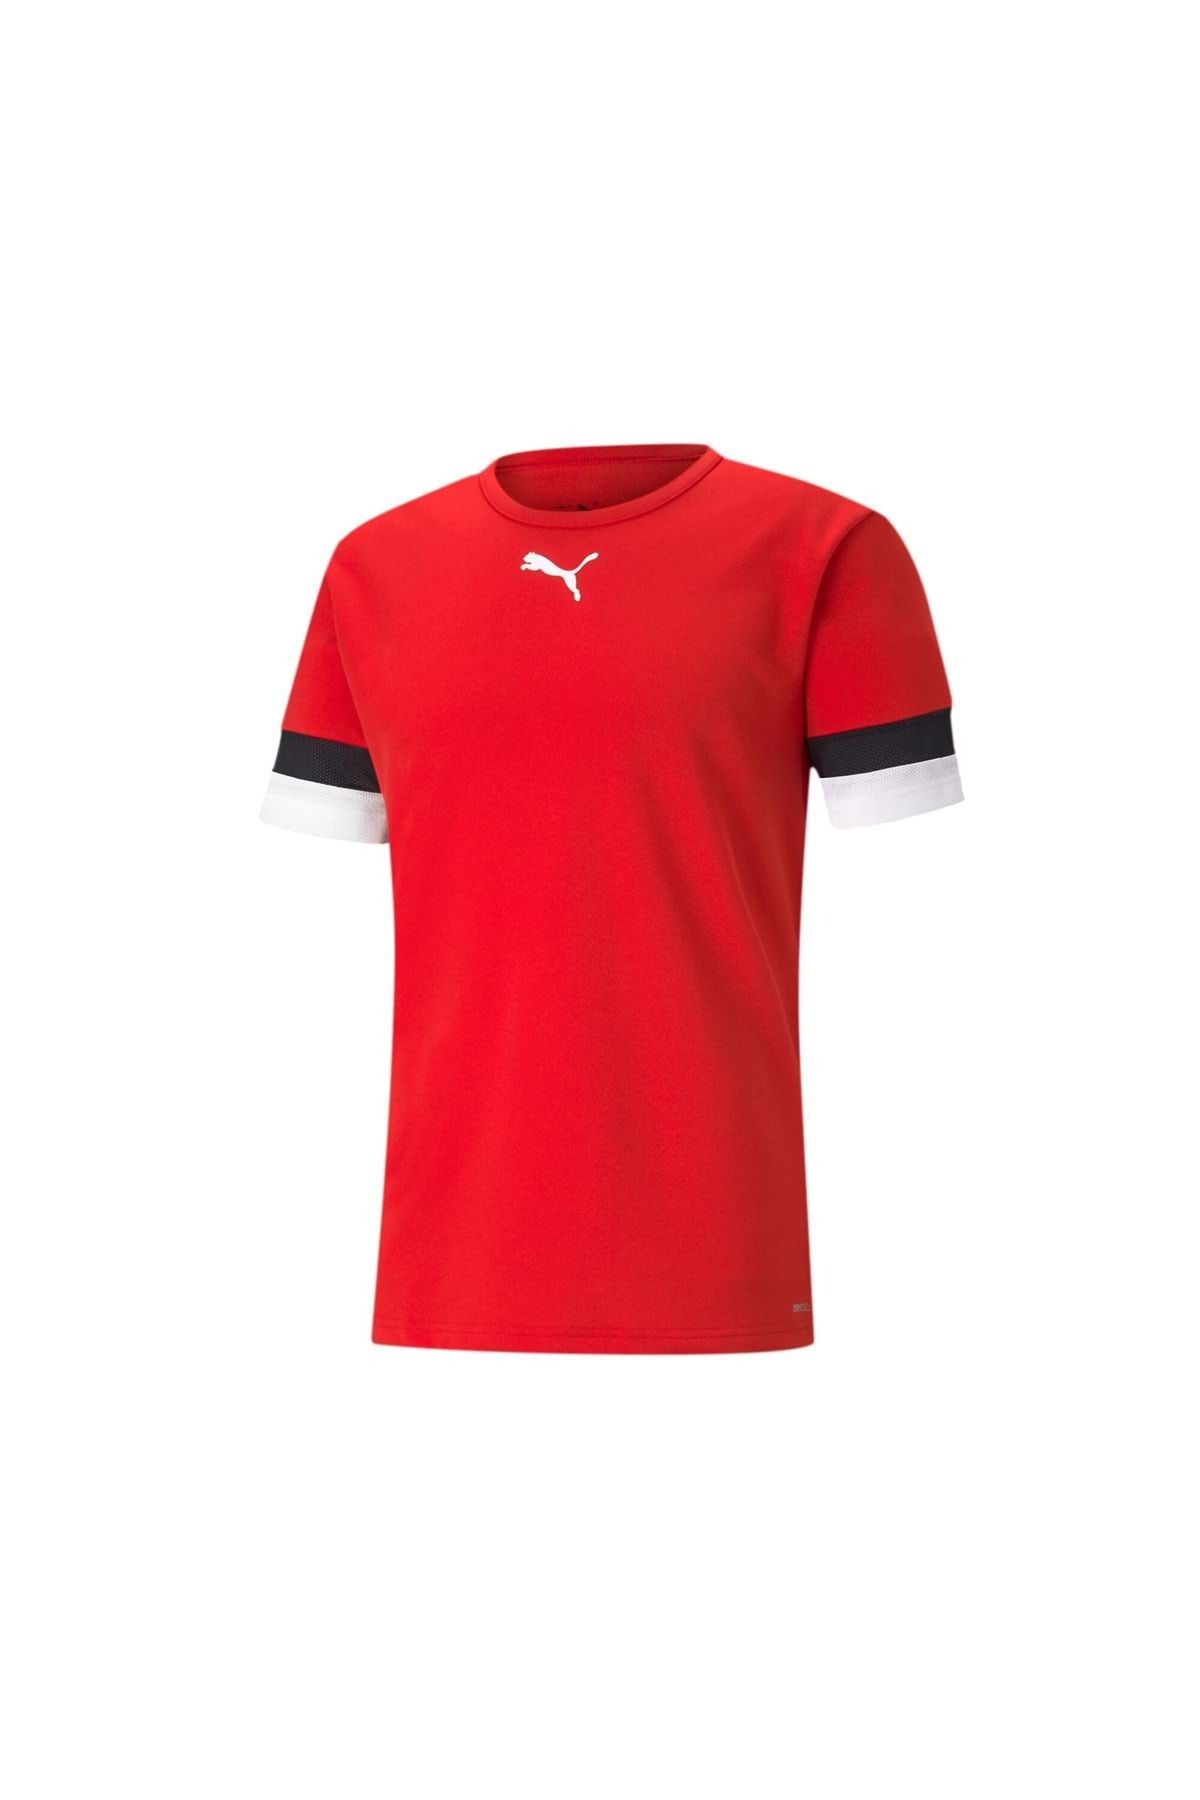 Puma 704932 Teamrise Jersey T-shirt Dry-cell Erkek Tişört Kırmızı